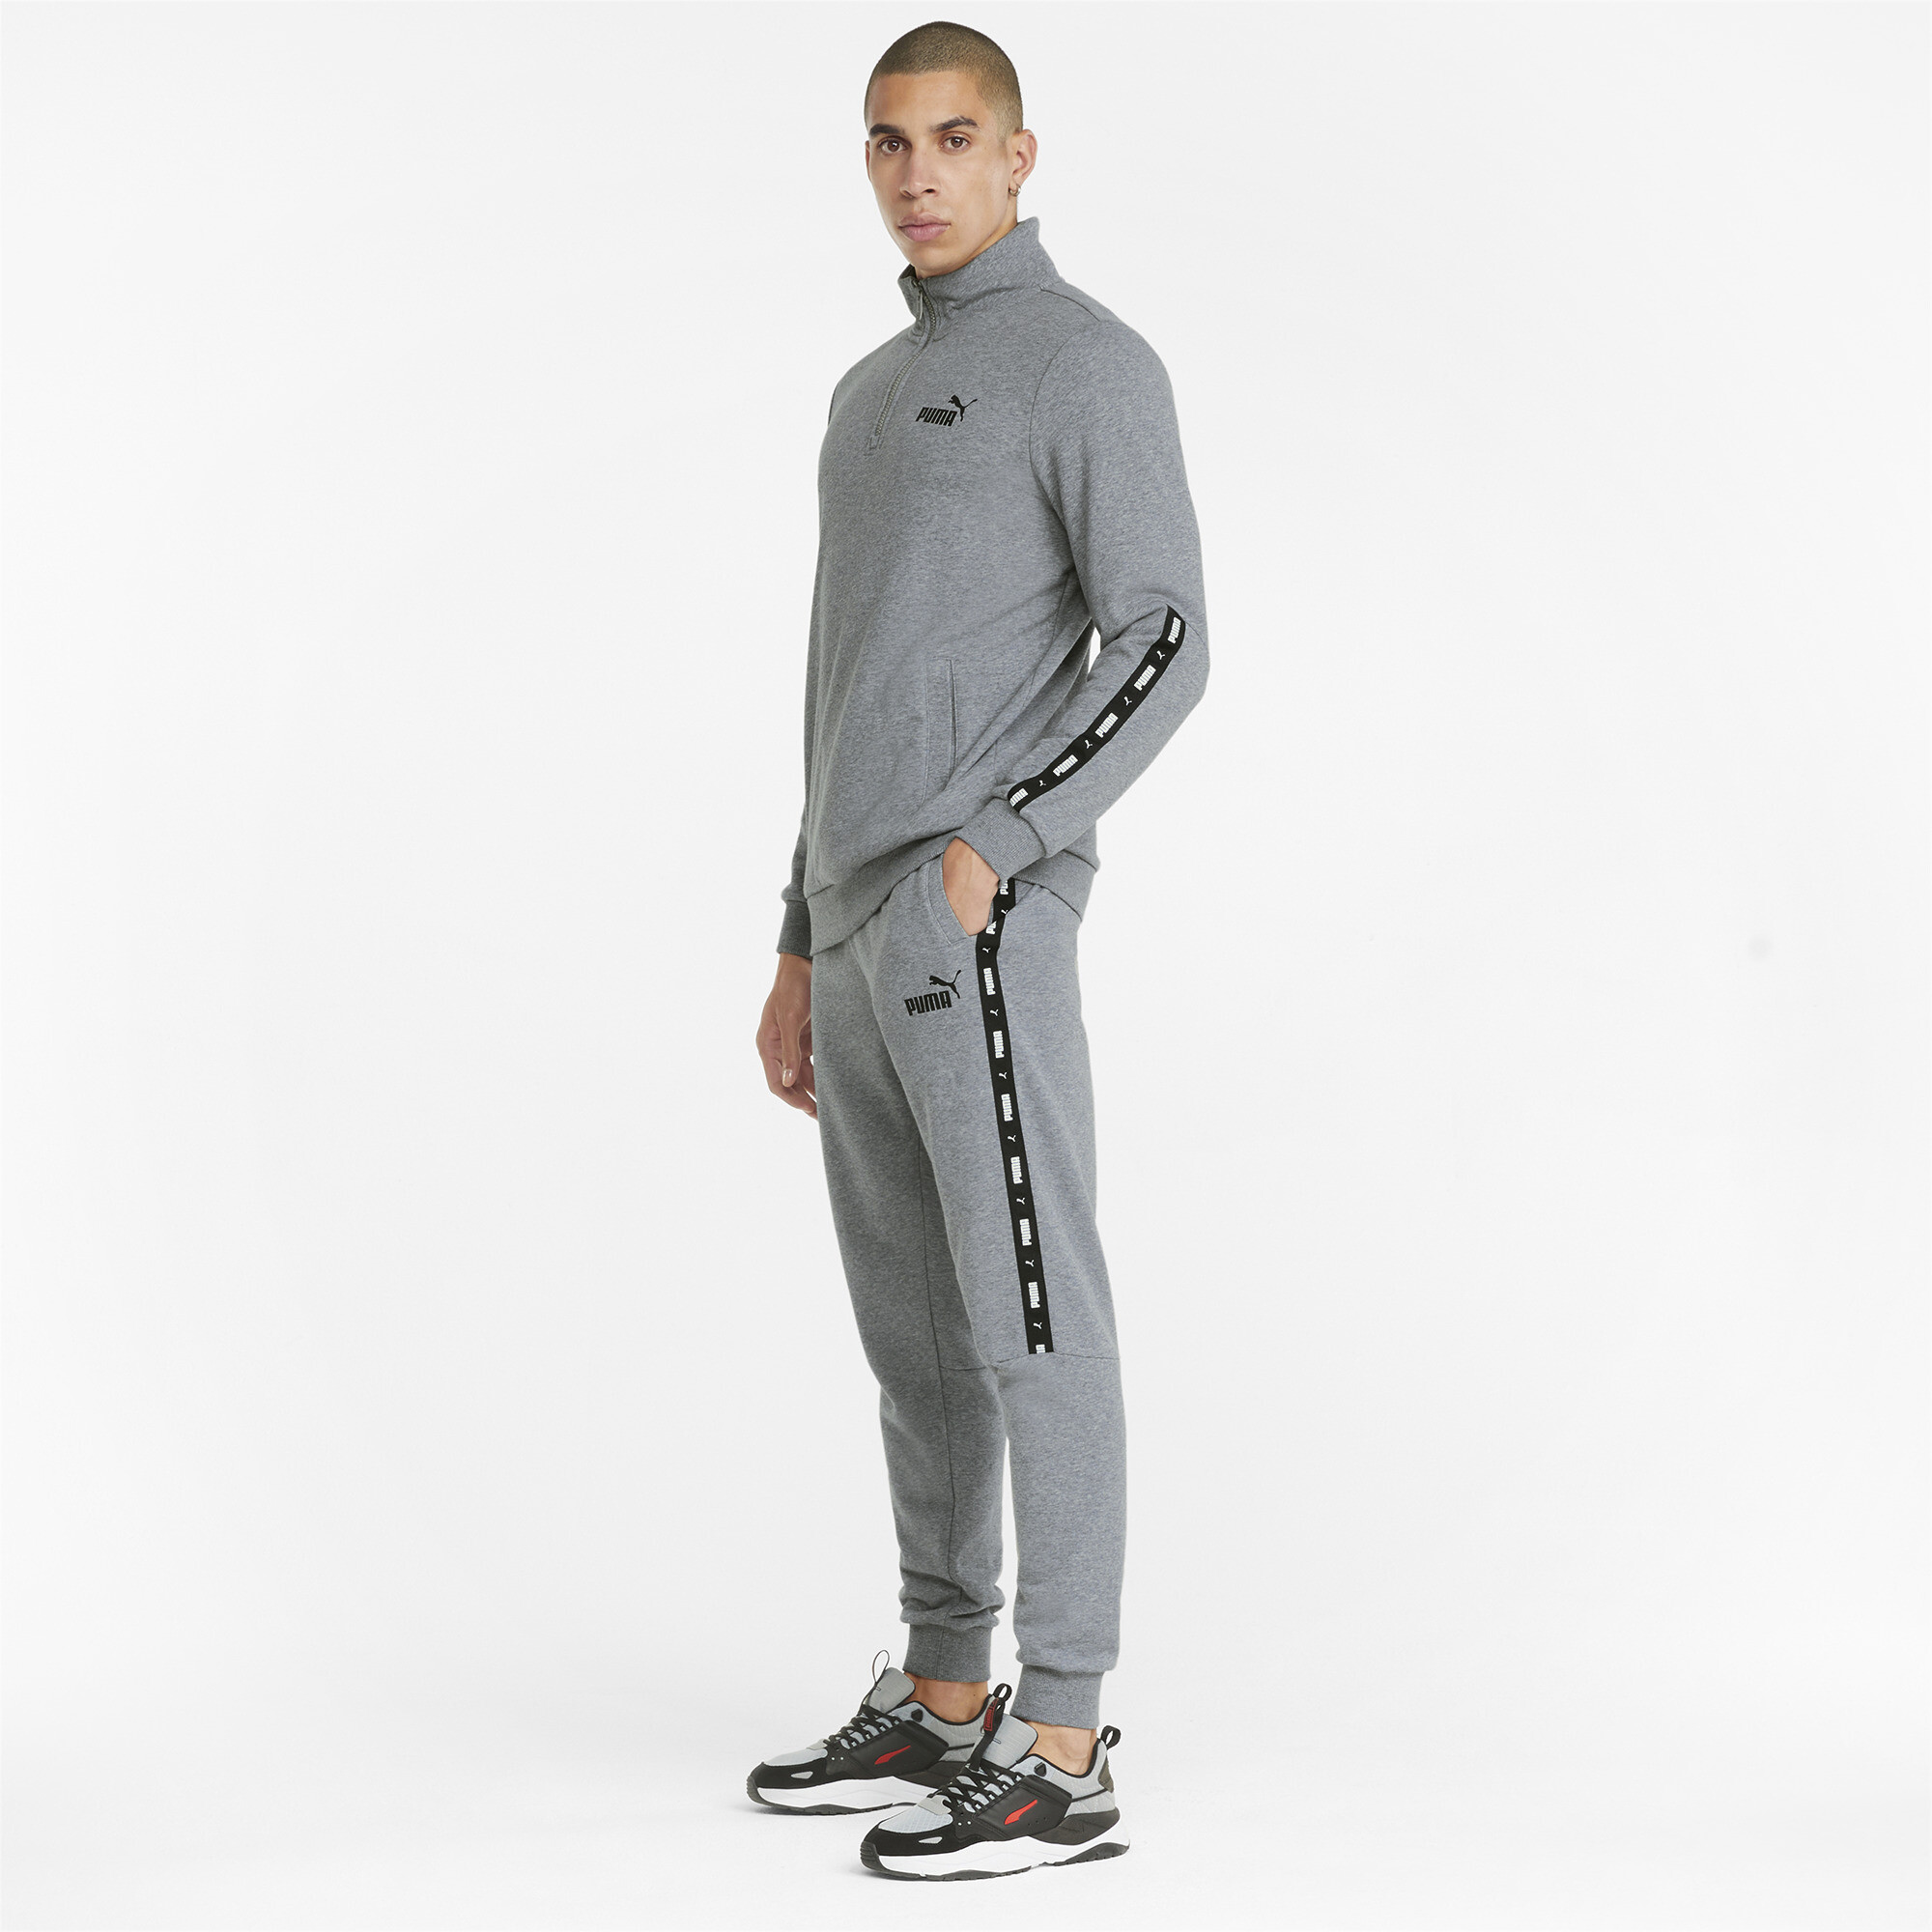 Men's Puma Essentials+ Tape's Sweatpants, Gray, Size 4XL, Clothing